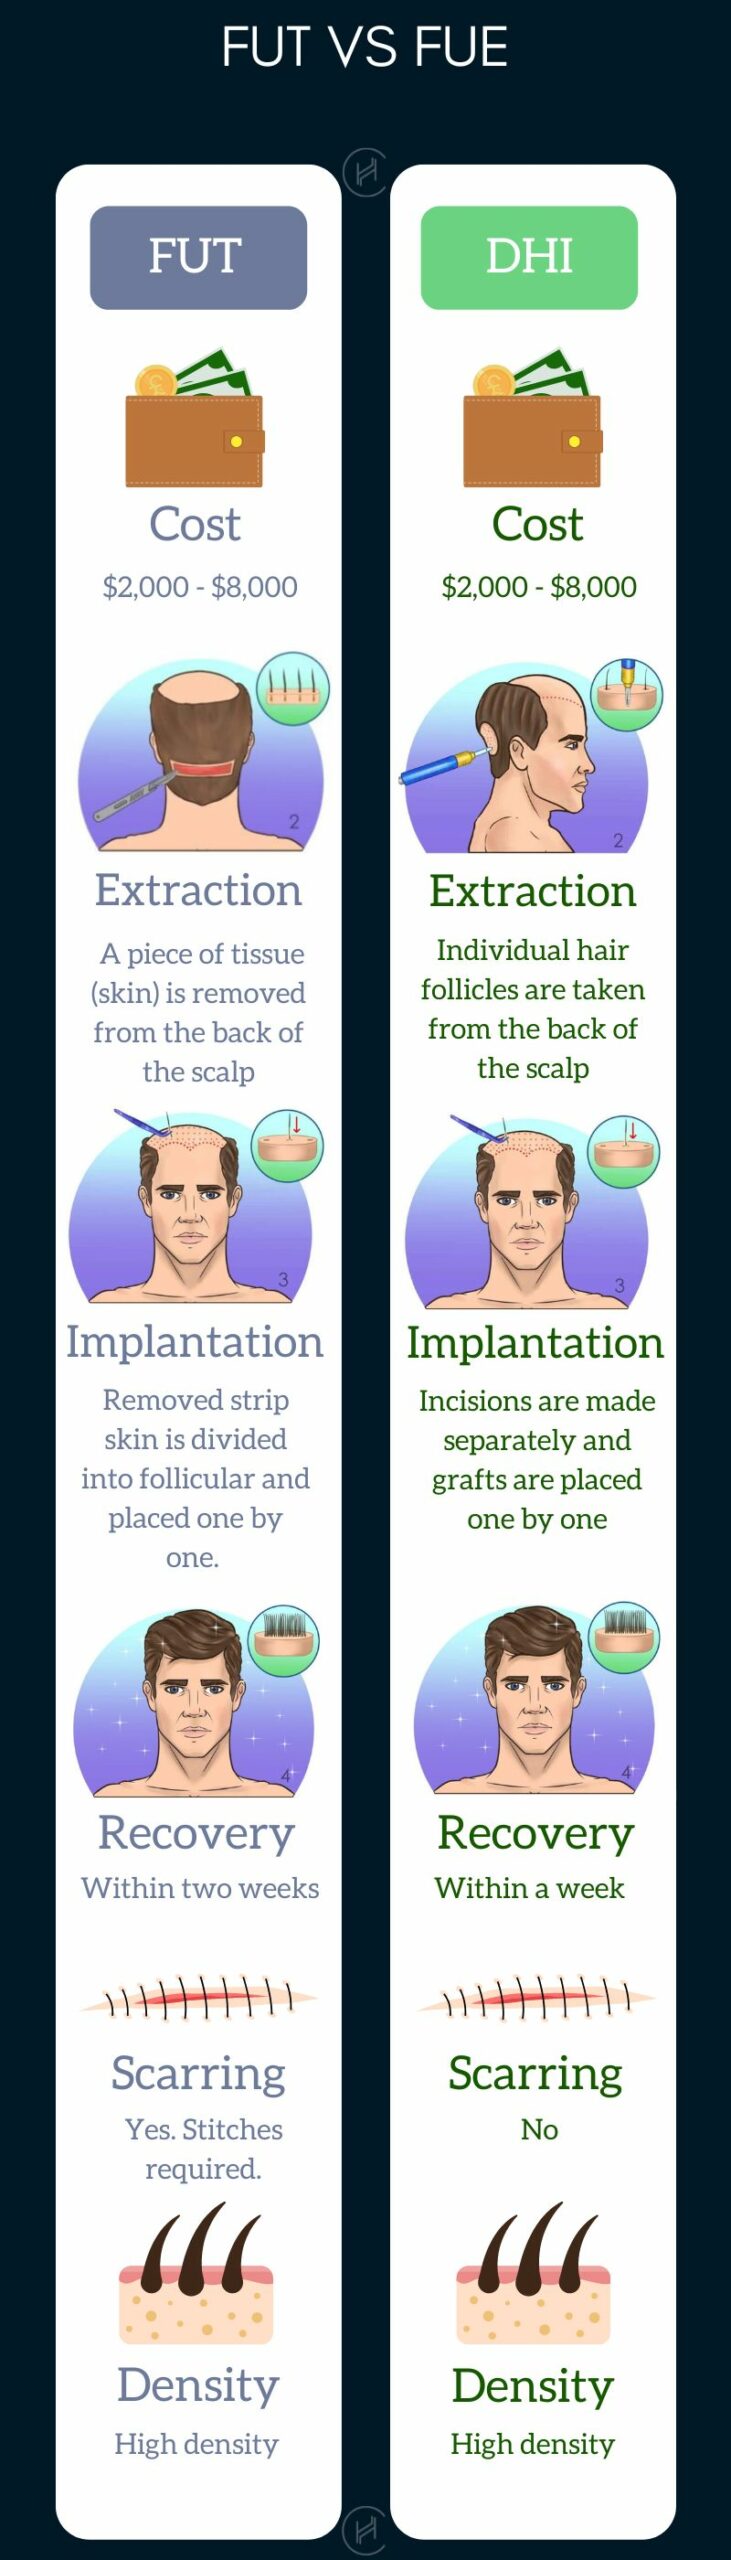 FUT vs FUE hair transplant differences